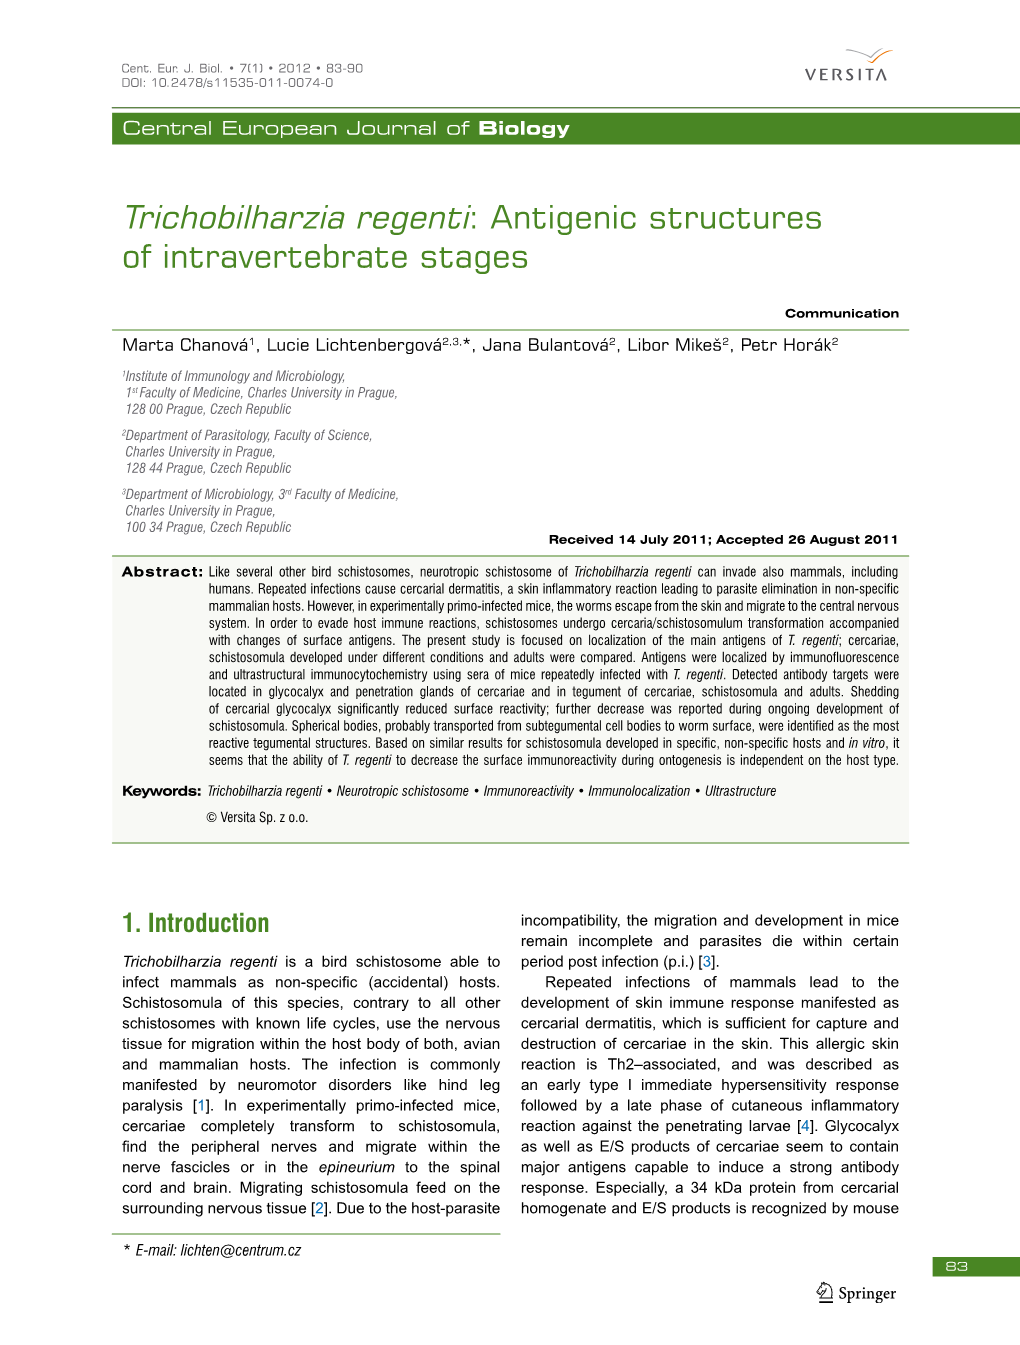 Trichobilharzia Regenti: Antigenic Structures of Intravertebrate Stages